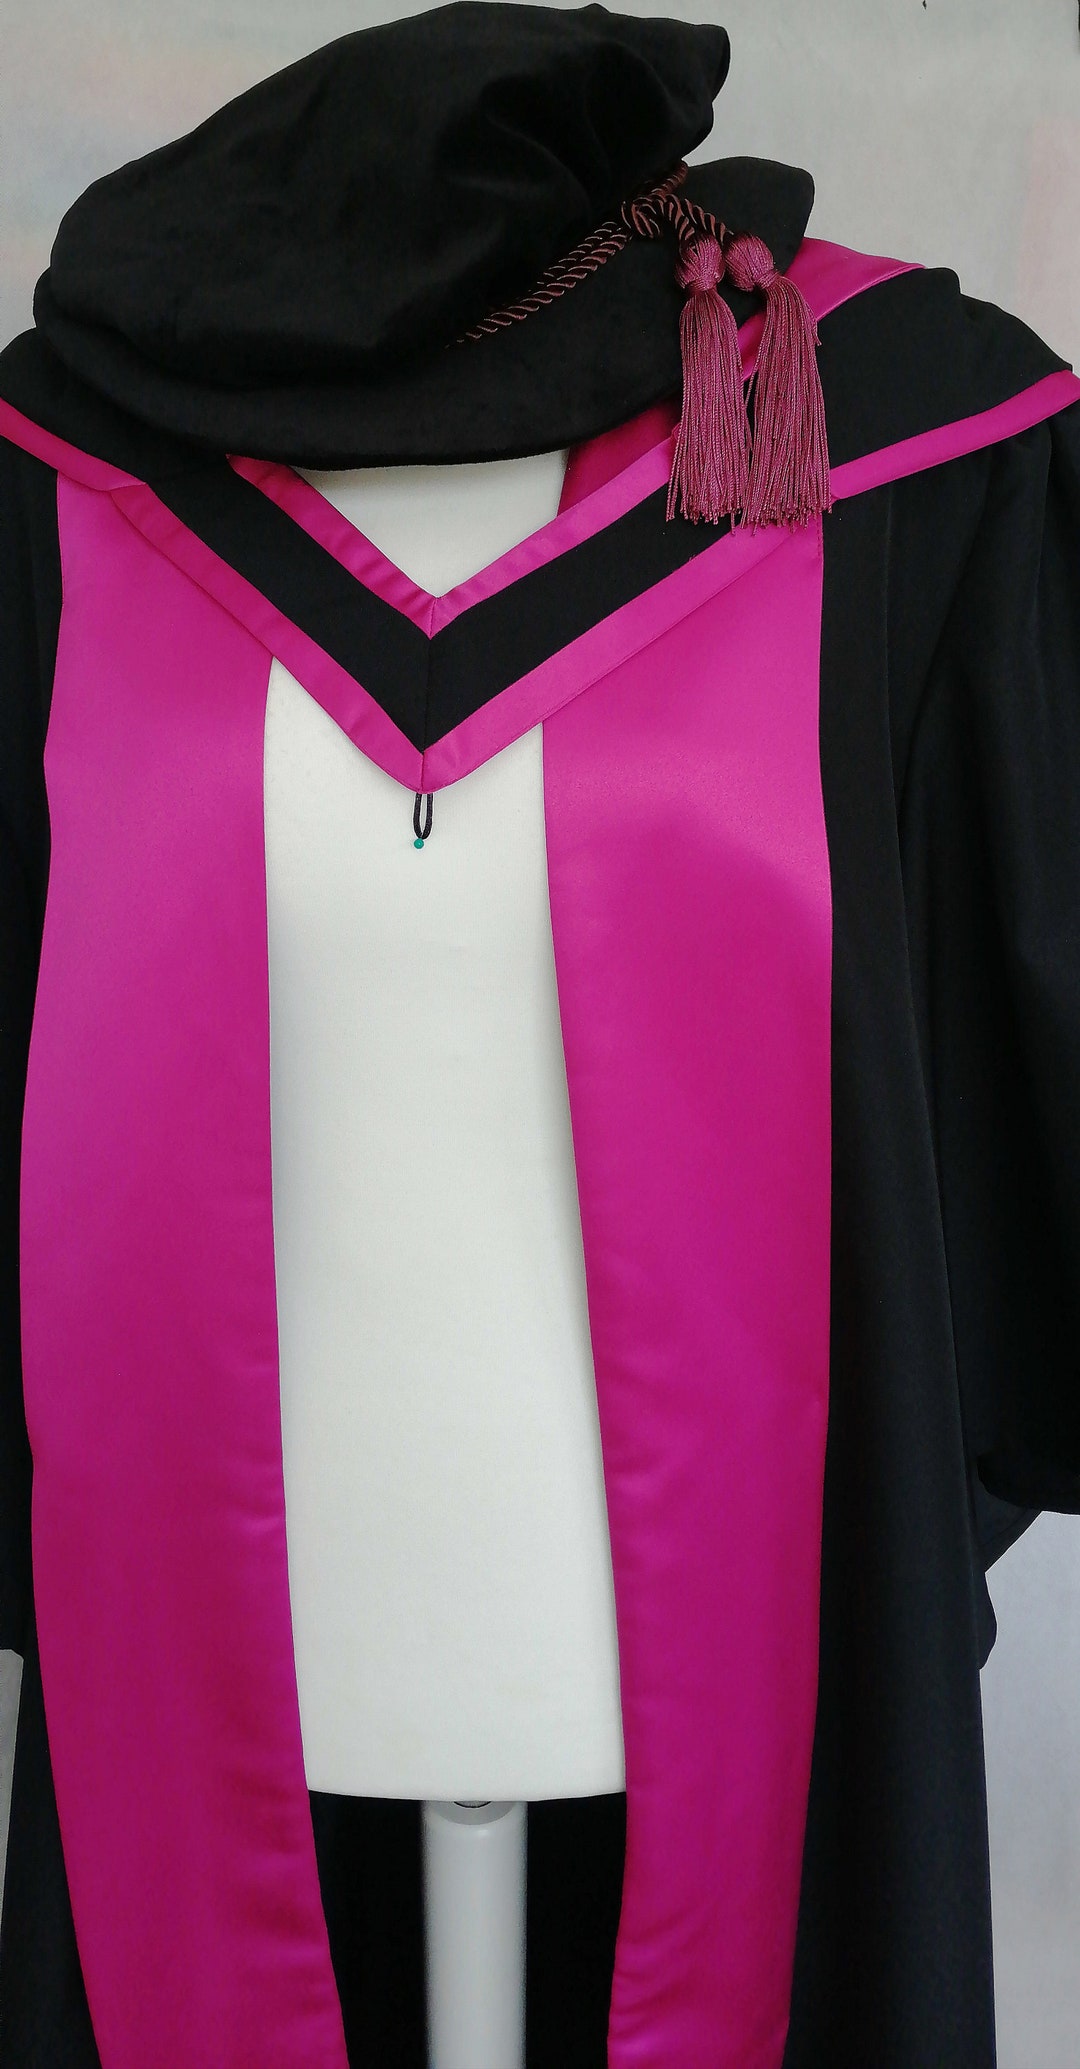 university of glasgow phd graduation gown